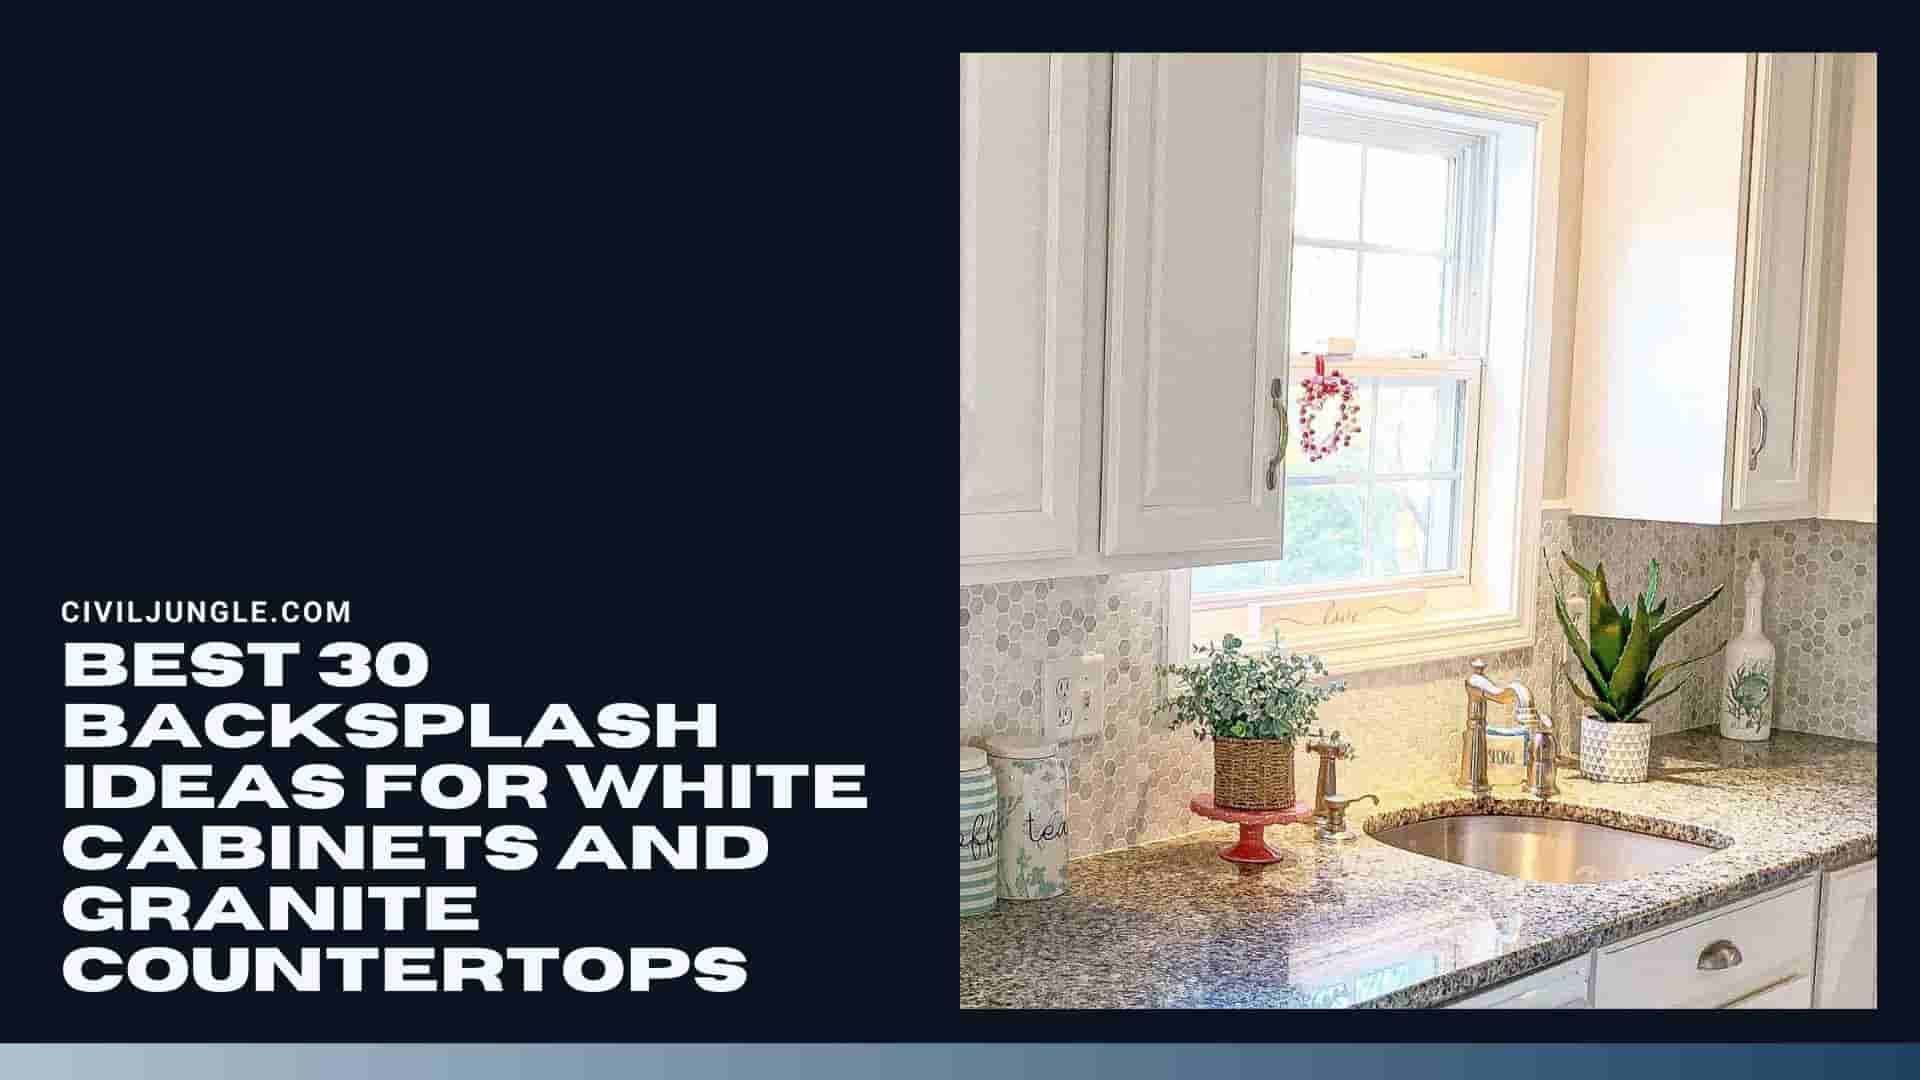 Best 30 Backsplash Ideas for White Cabinets and Granite Countertops